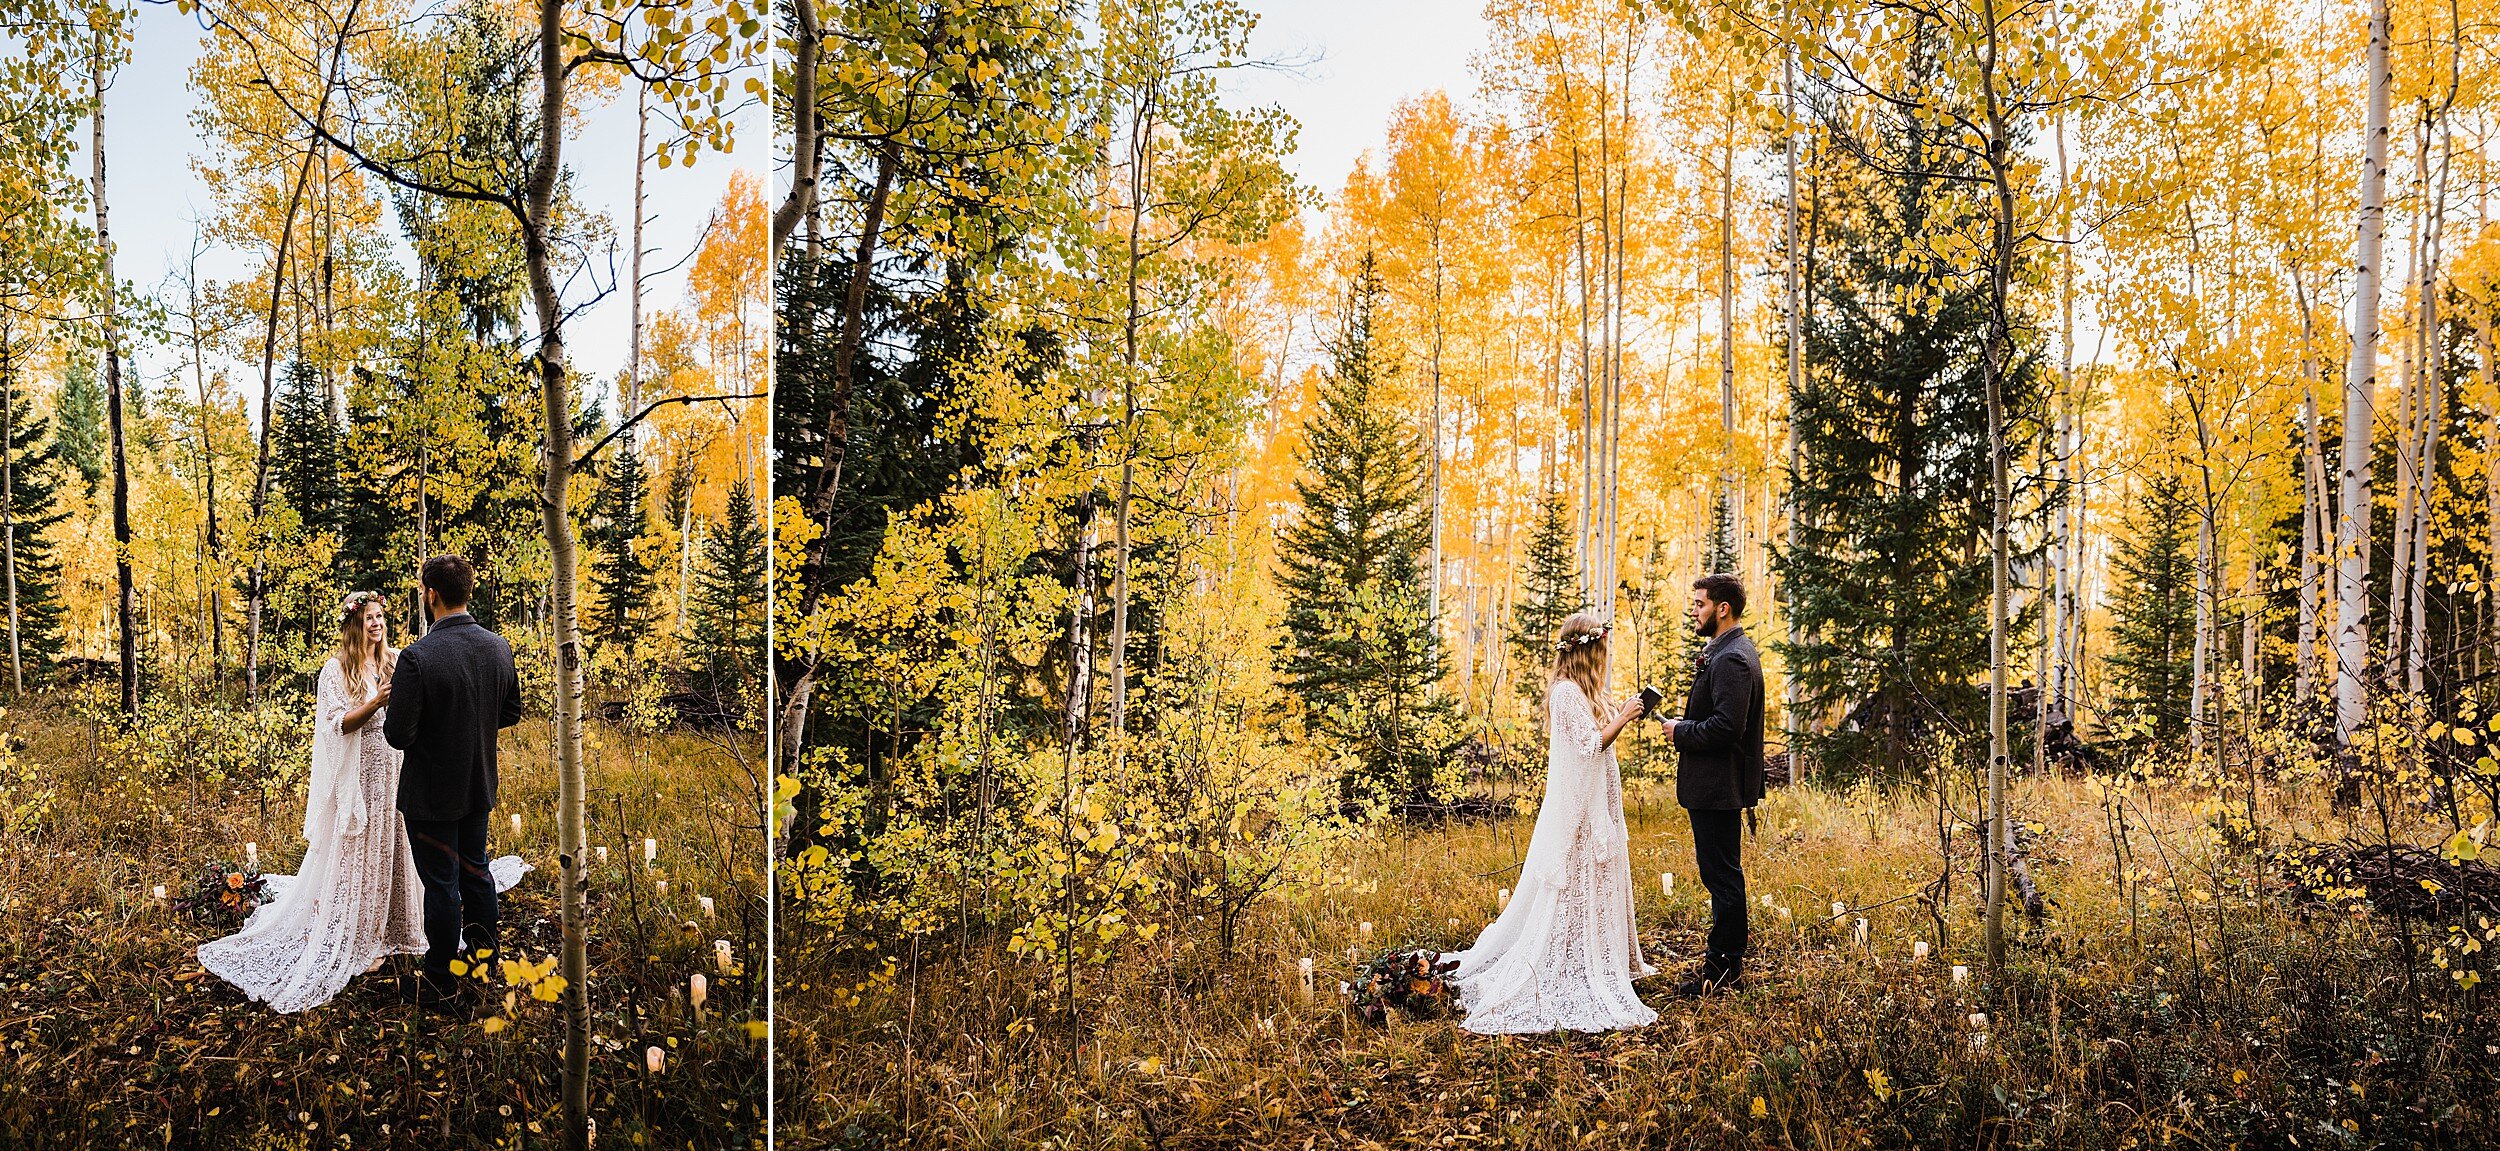 Colorado Elopement | Fall Colors in Breckenridge | Colorado Elopement Photographer